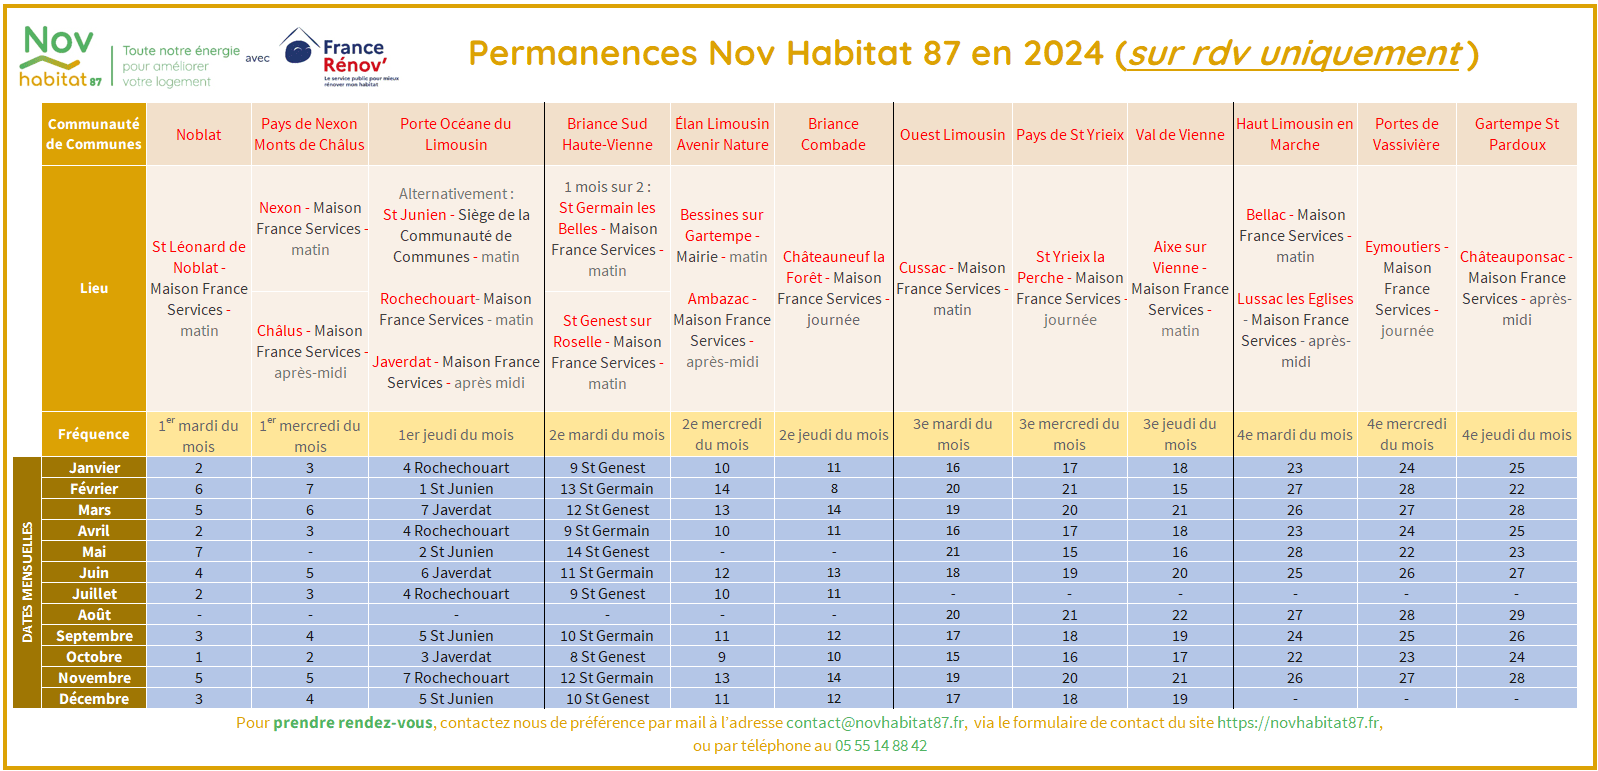 Calendrier des permanences Nov Habitat 87 en 2024